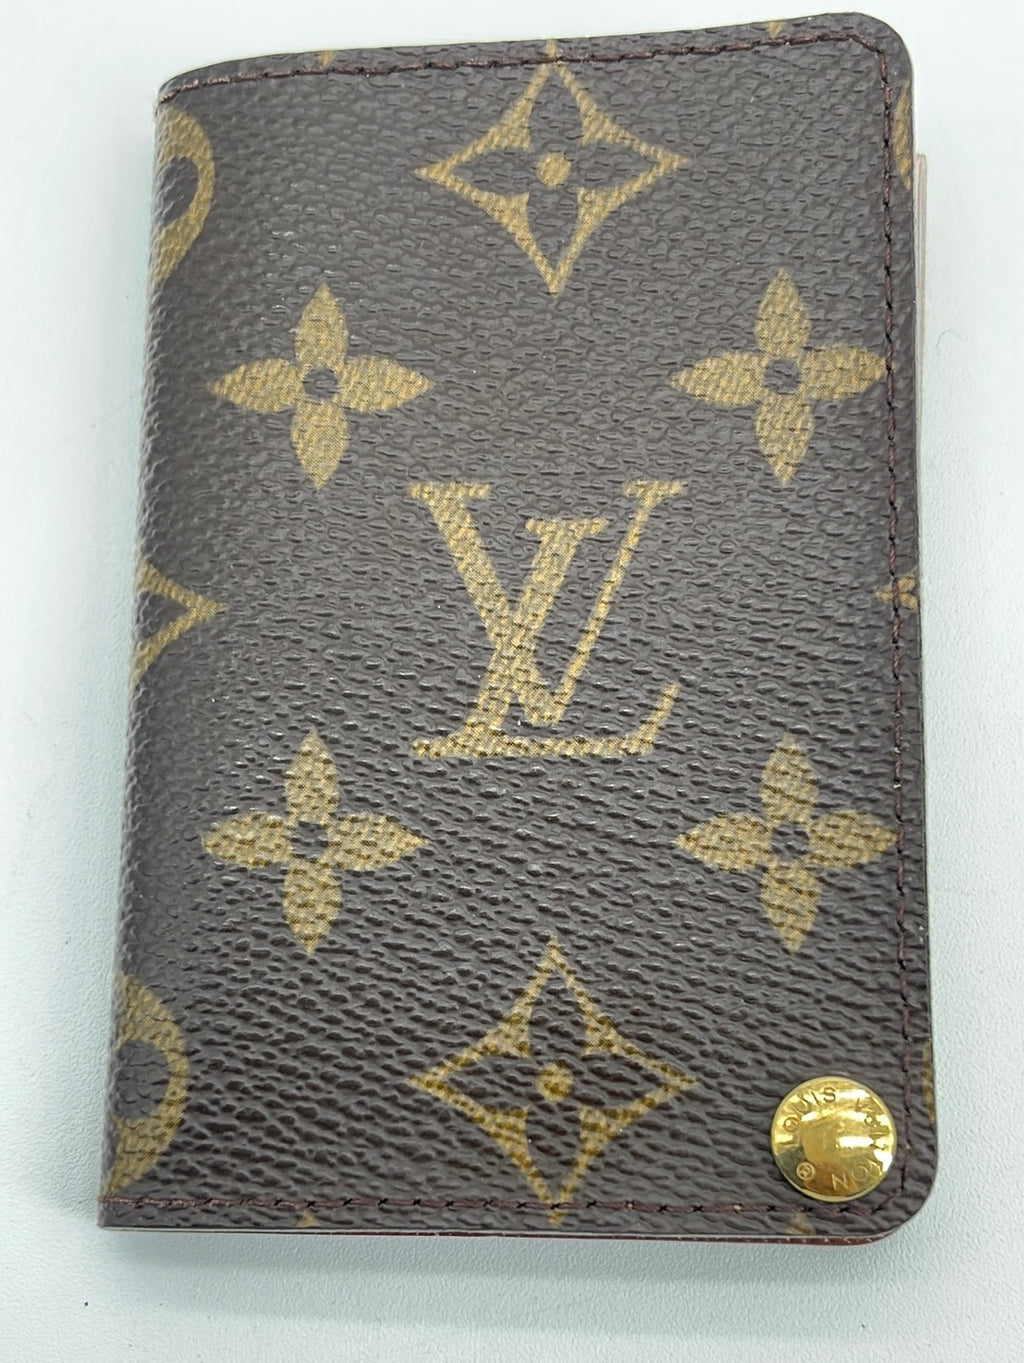 Louis Vuitton Porte Cartes Card Holder Wallet